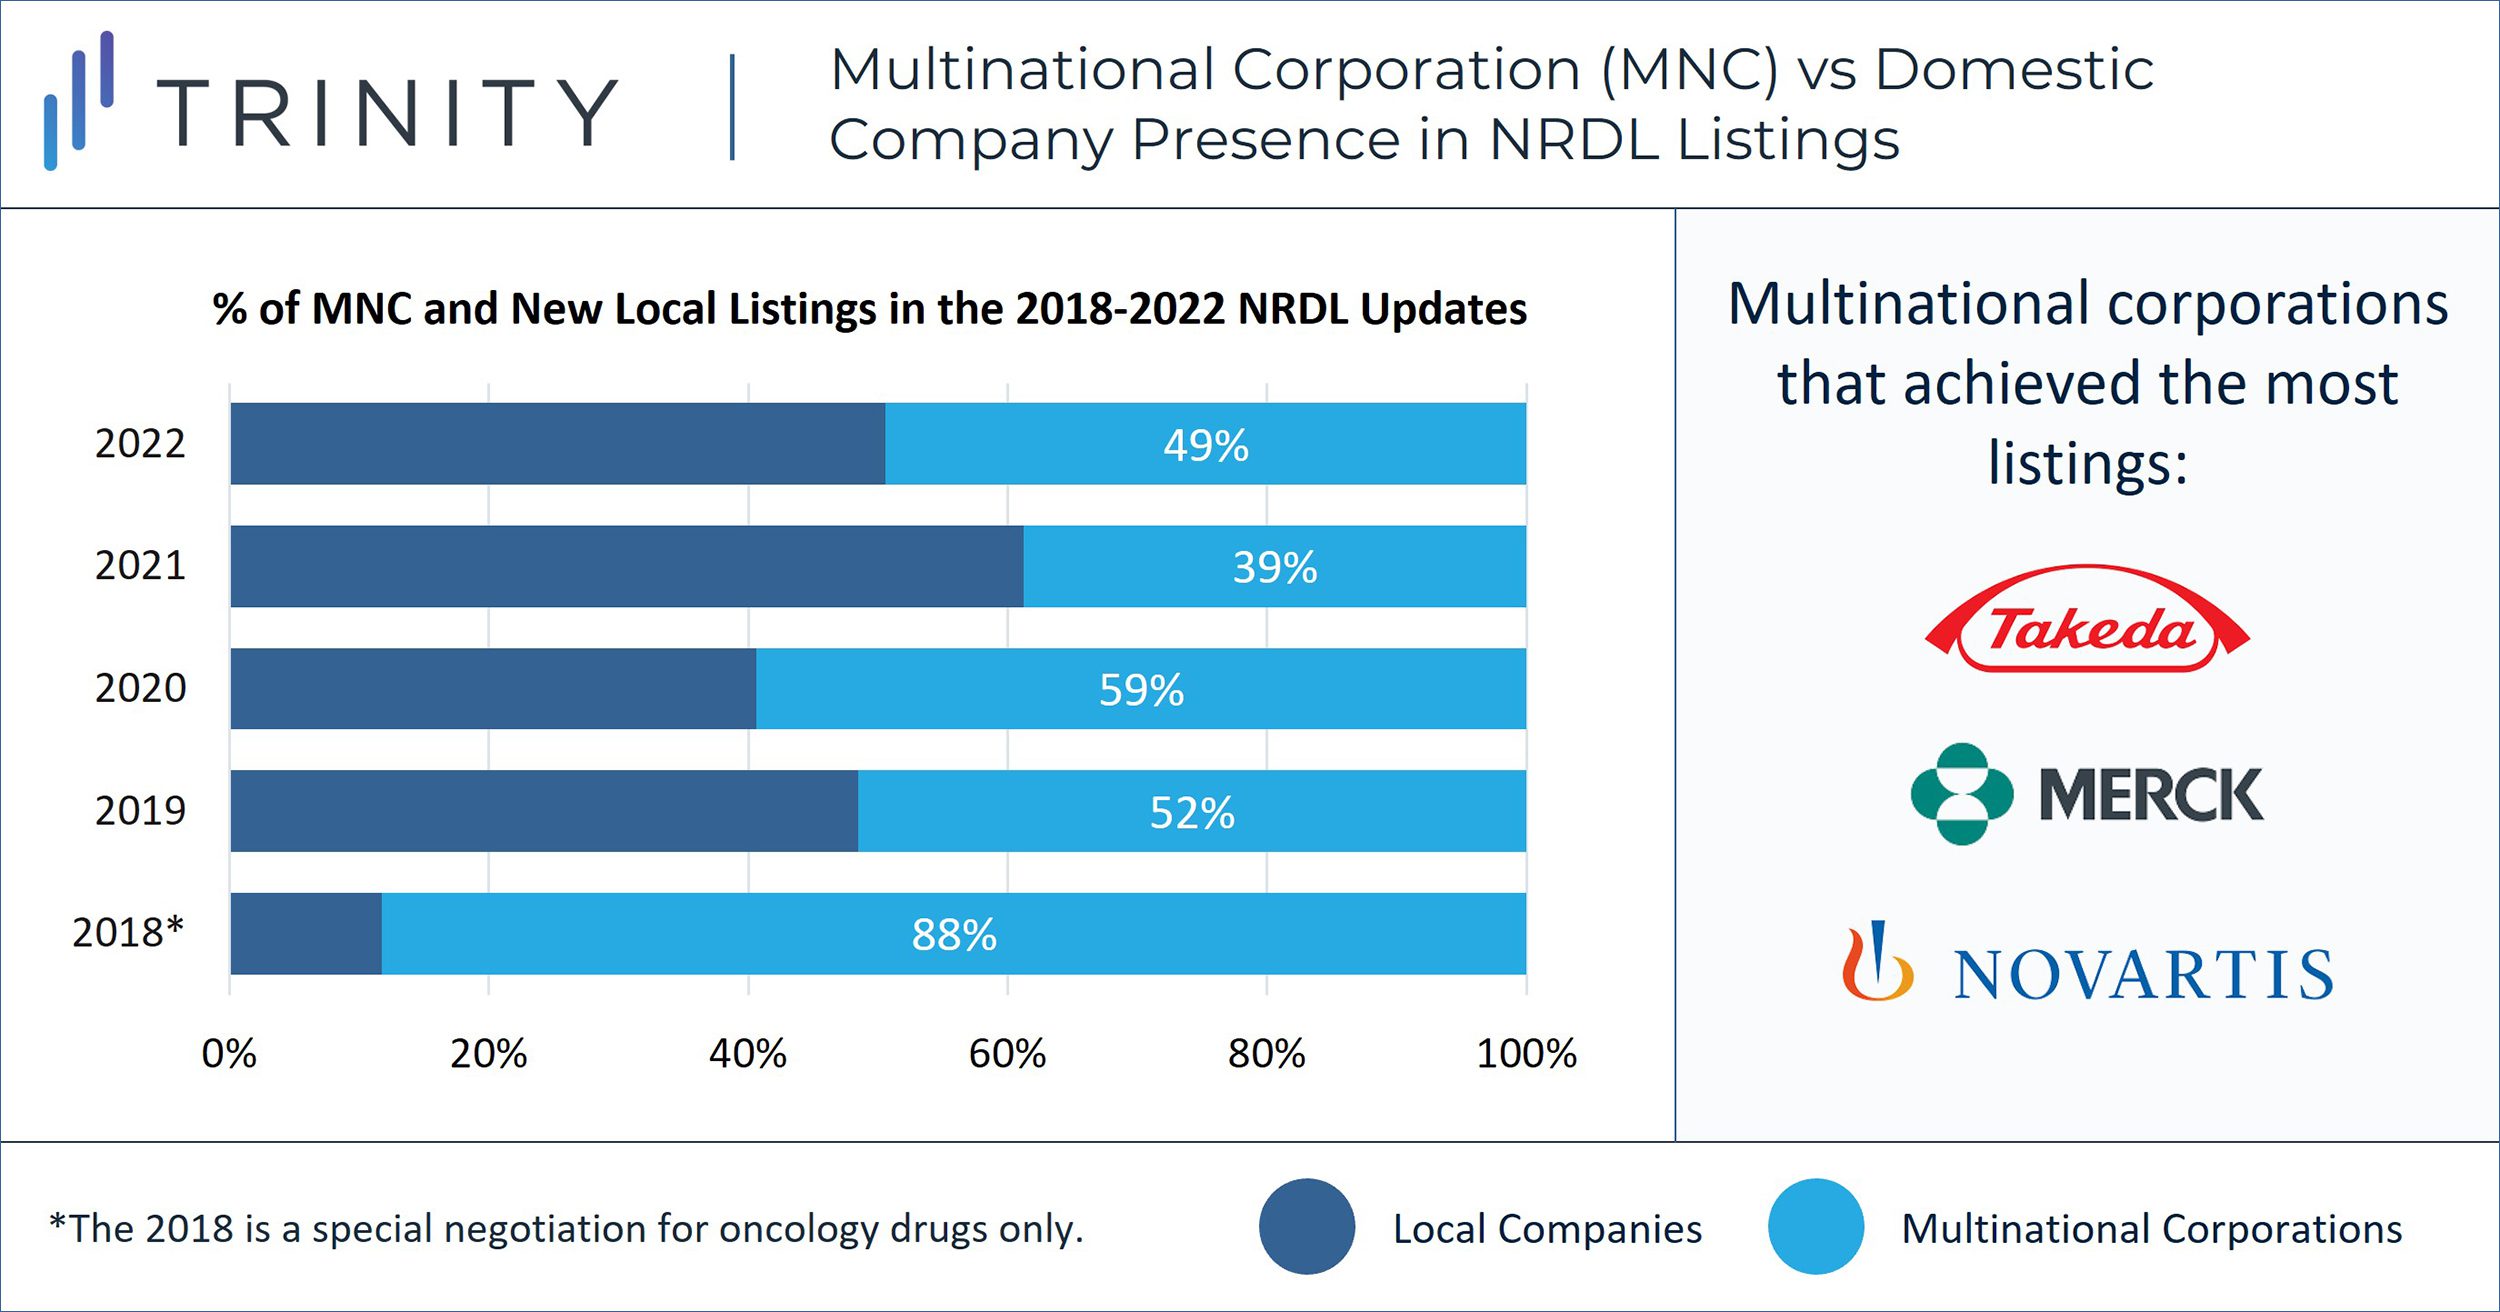 Multinational Corporation (MNC) vs. Domestic Company Presence in NRDL Listings